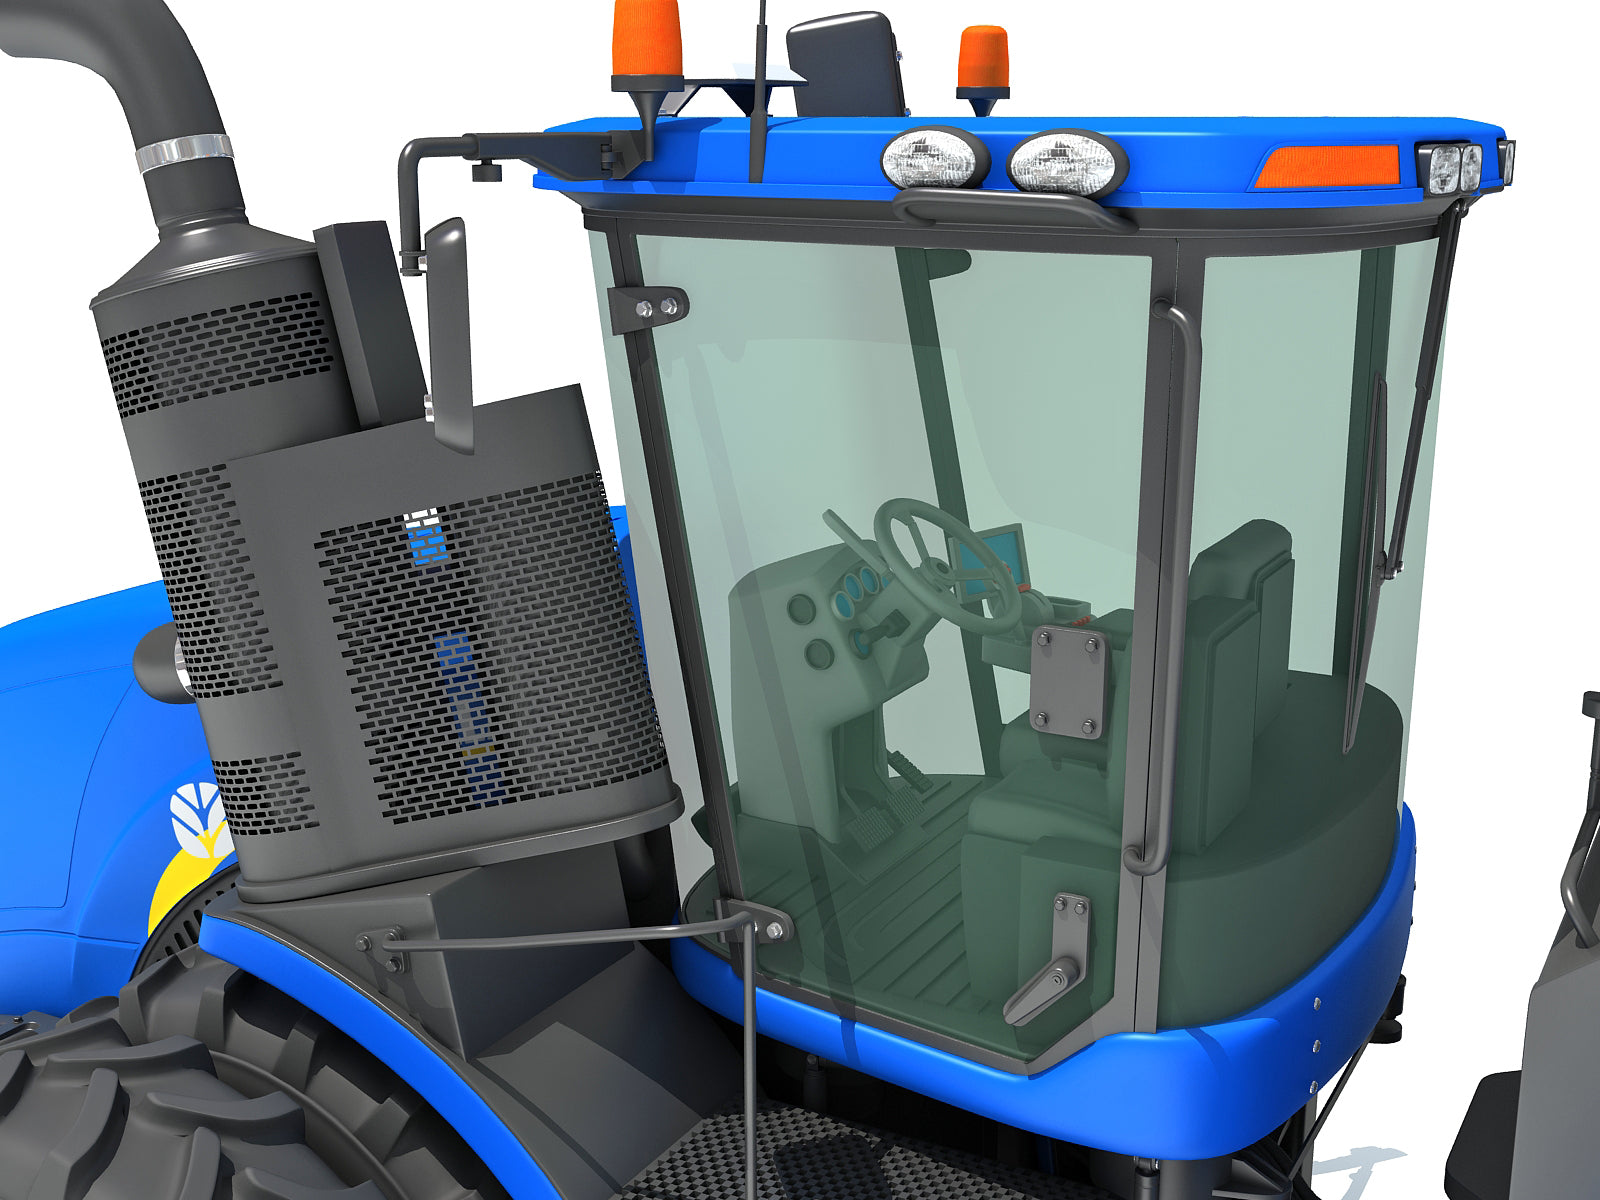 New Holland Tractor 3D Models